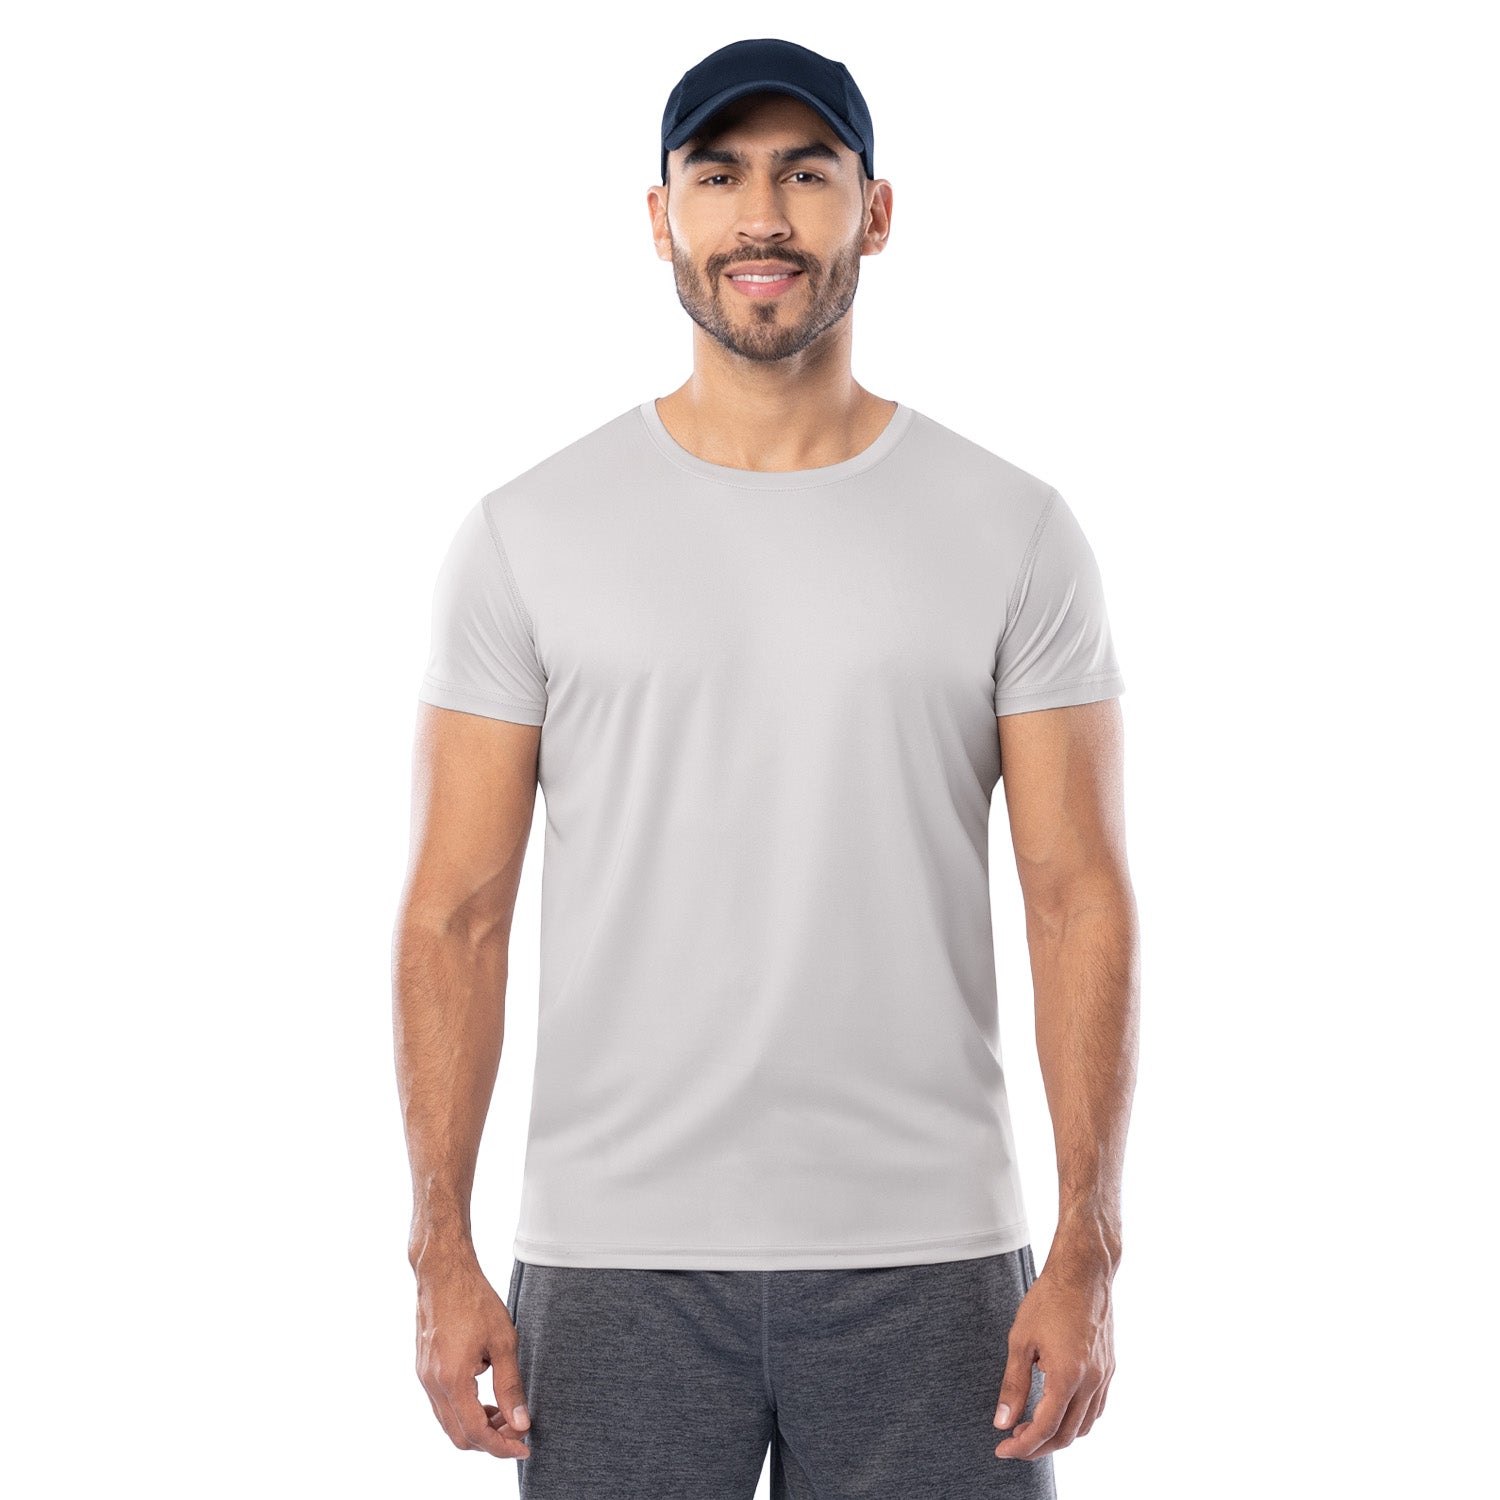 Men's Light Grey Training T-Shirt Front View